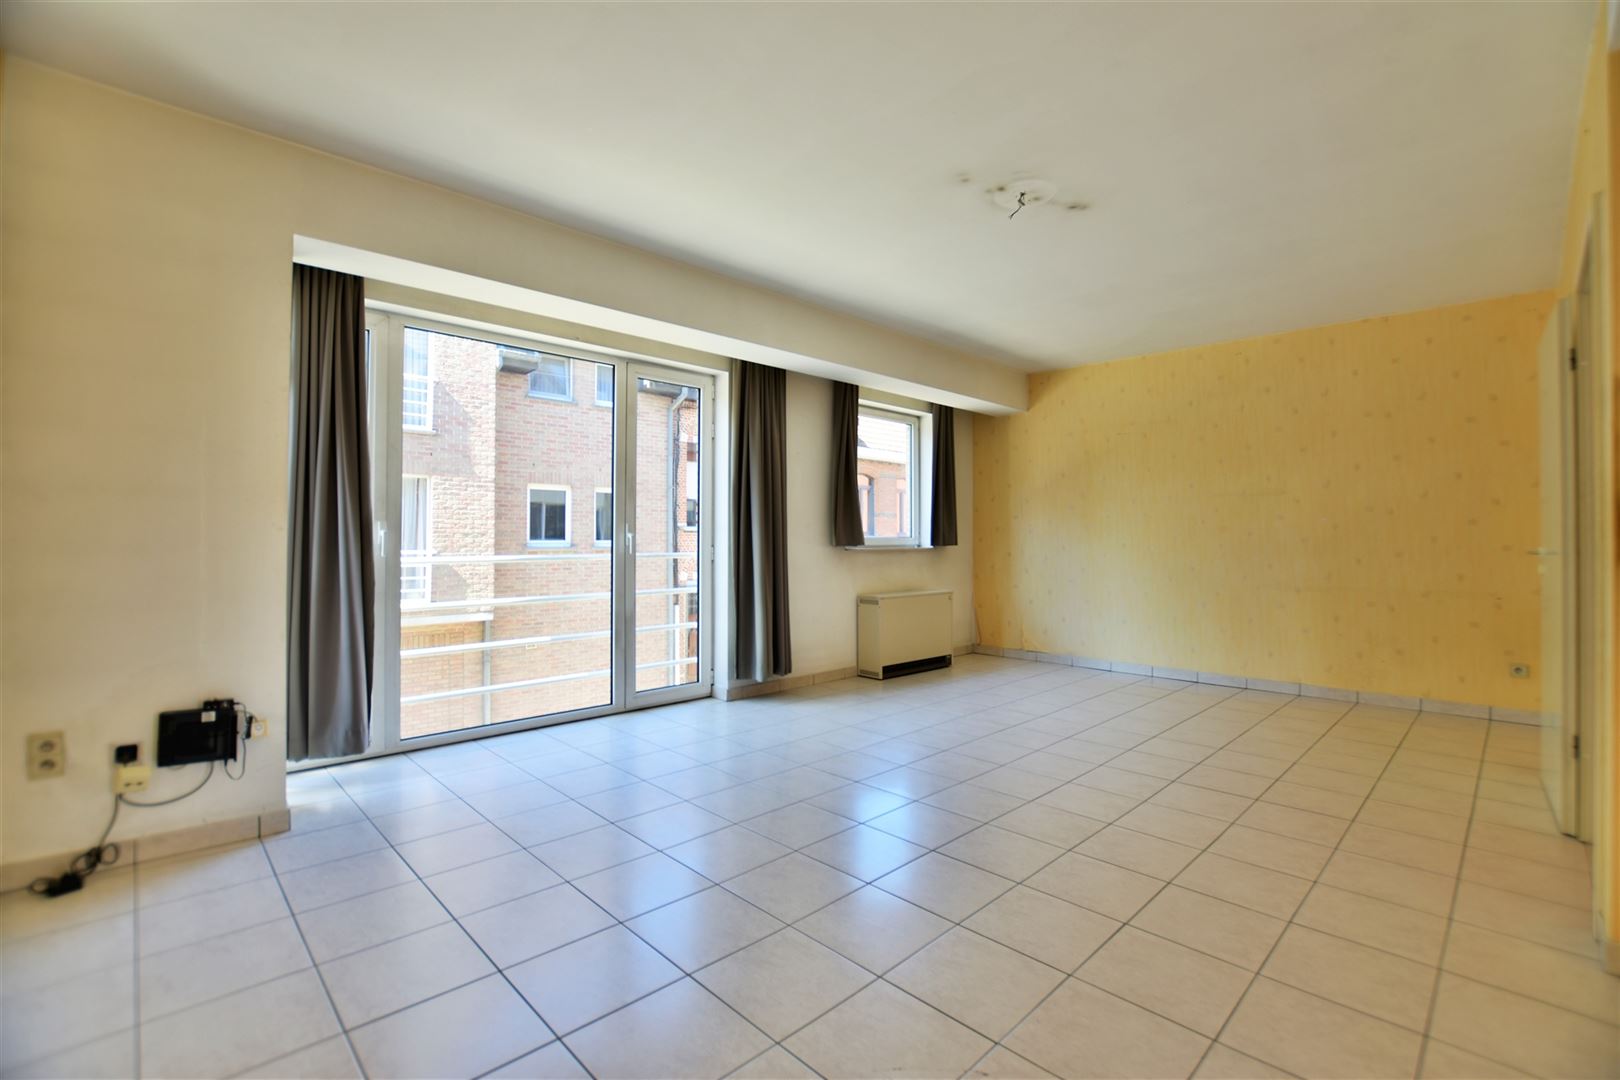 Foto 3 : Appartement te 9200 SINT-GILLIS-DENDERMONDE (België) - Prijs € 149.000